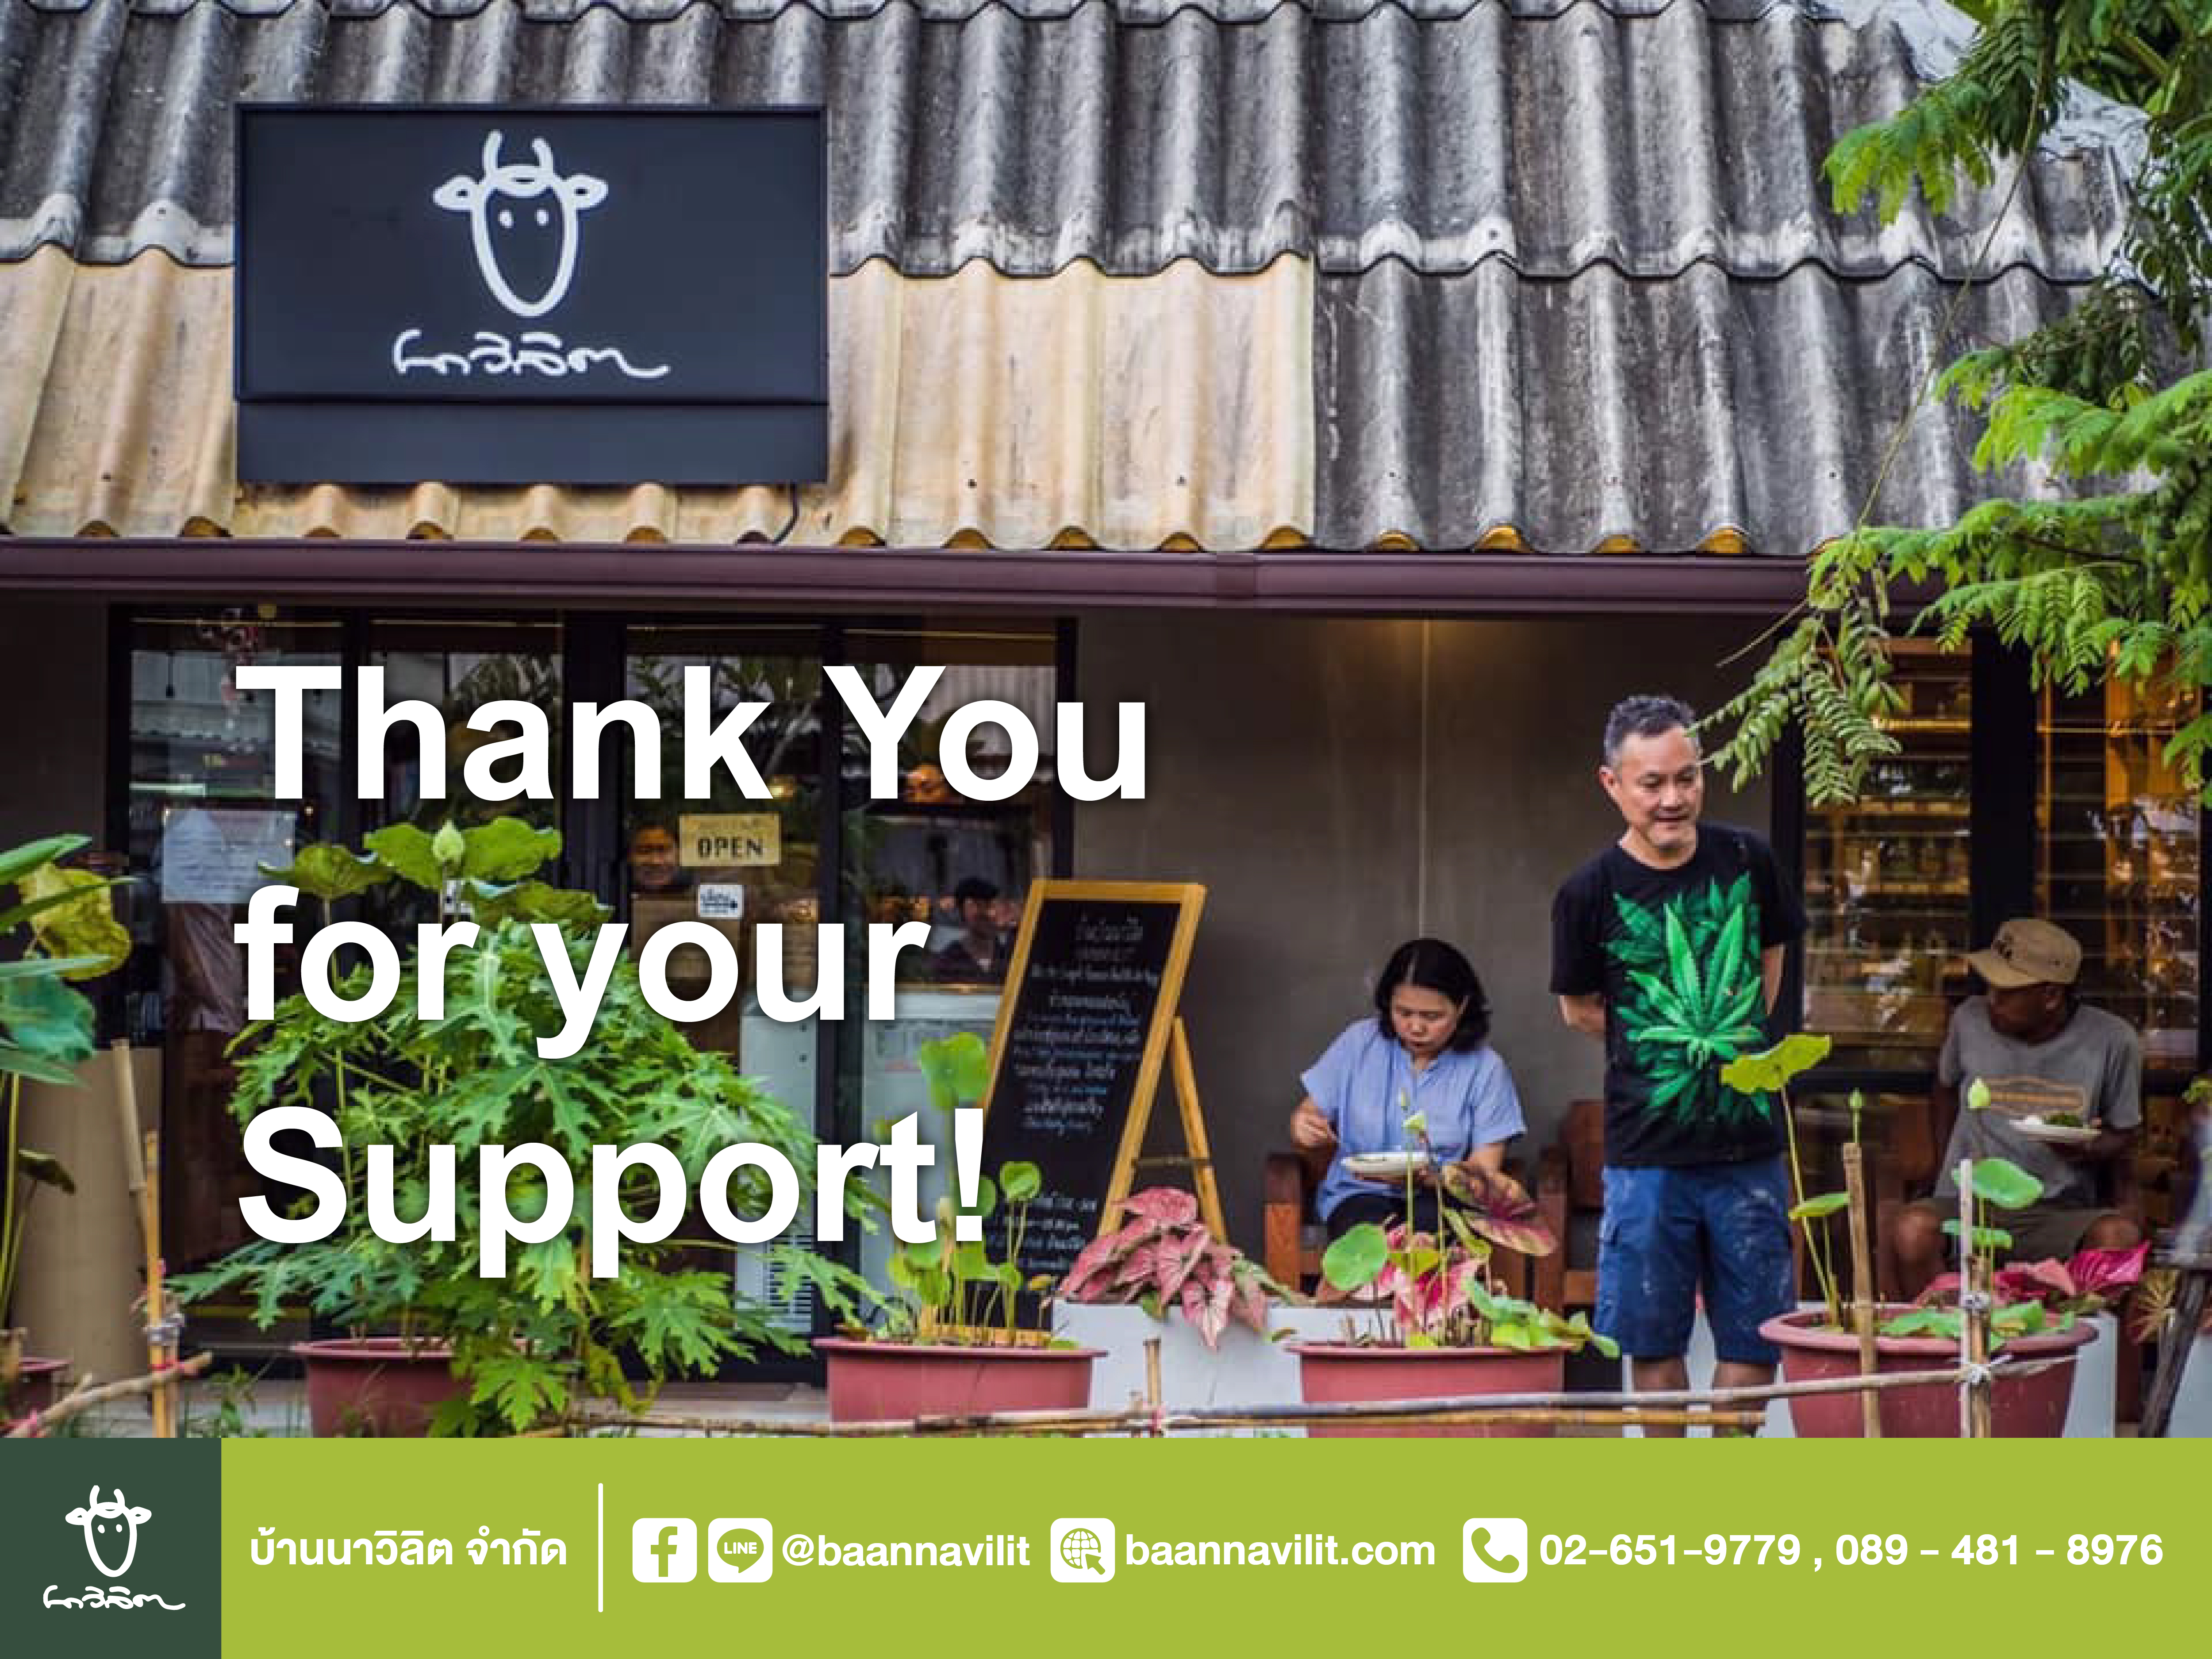 Thank you for your support ทุกคำสั่งซื้อ เป็นแรงสนับสนุนเกษตรกรชาวไทยทุกคน